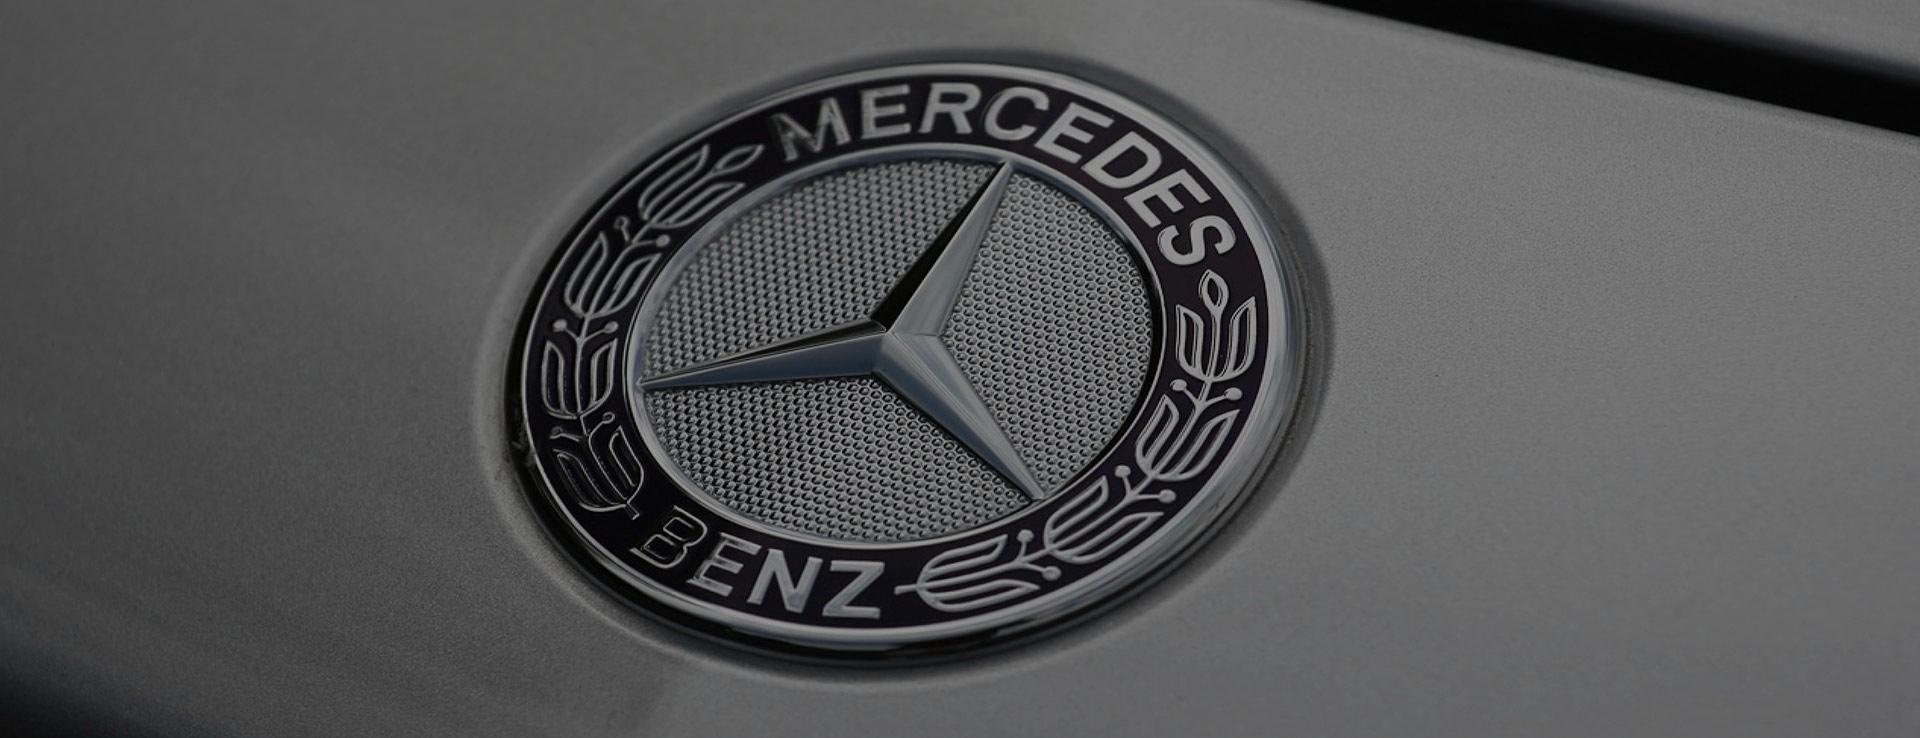 Mercedes Benz service center